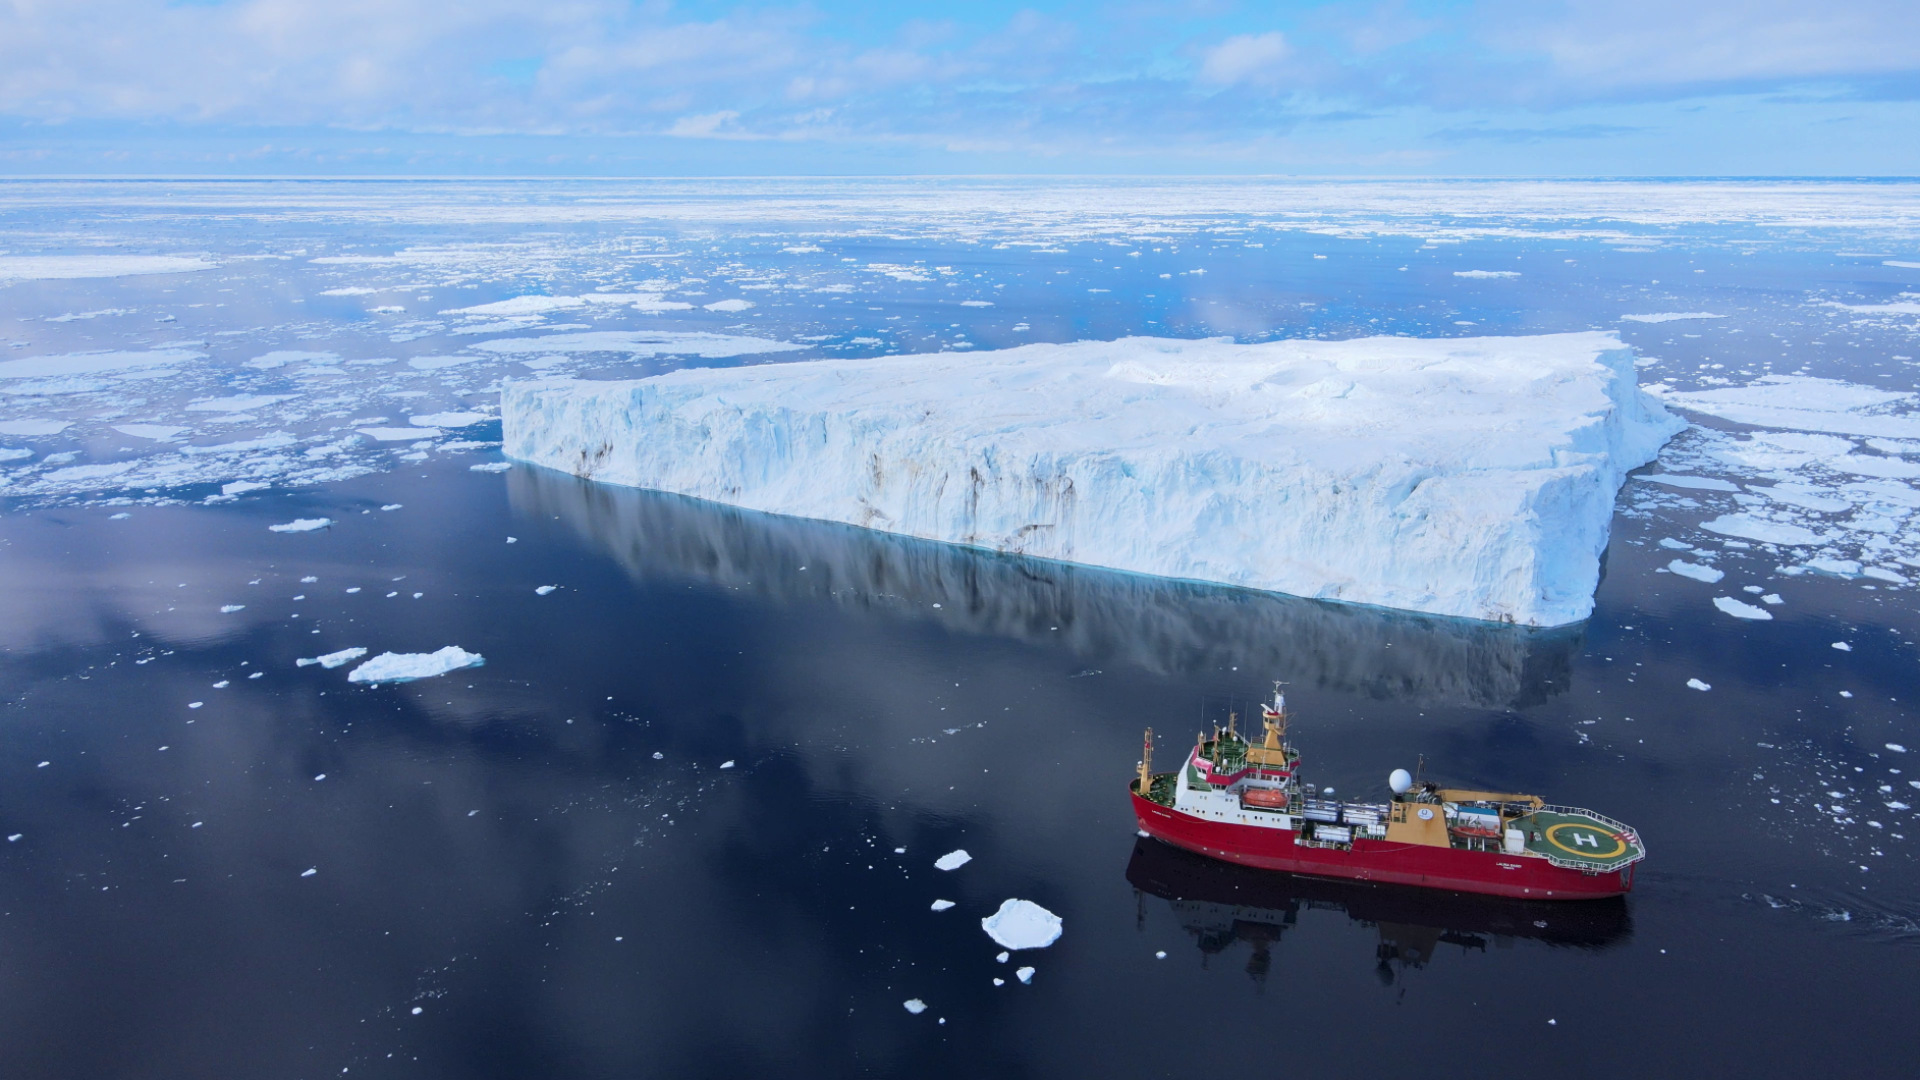 La rompighiaccio Laura Bassi salpa verso l’Antartide